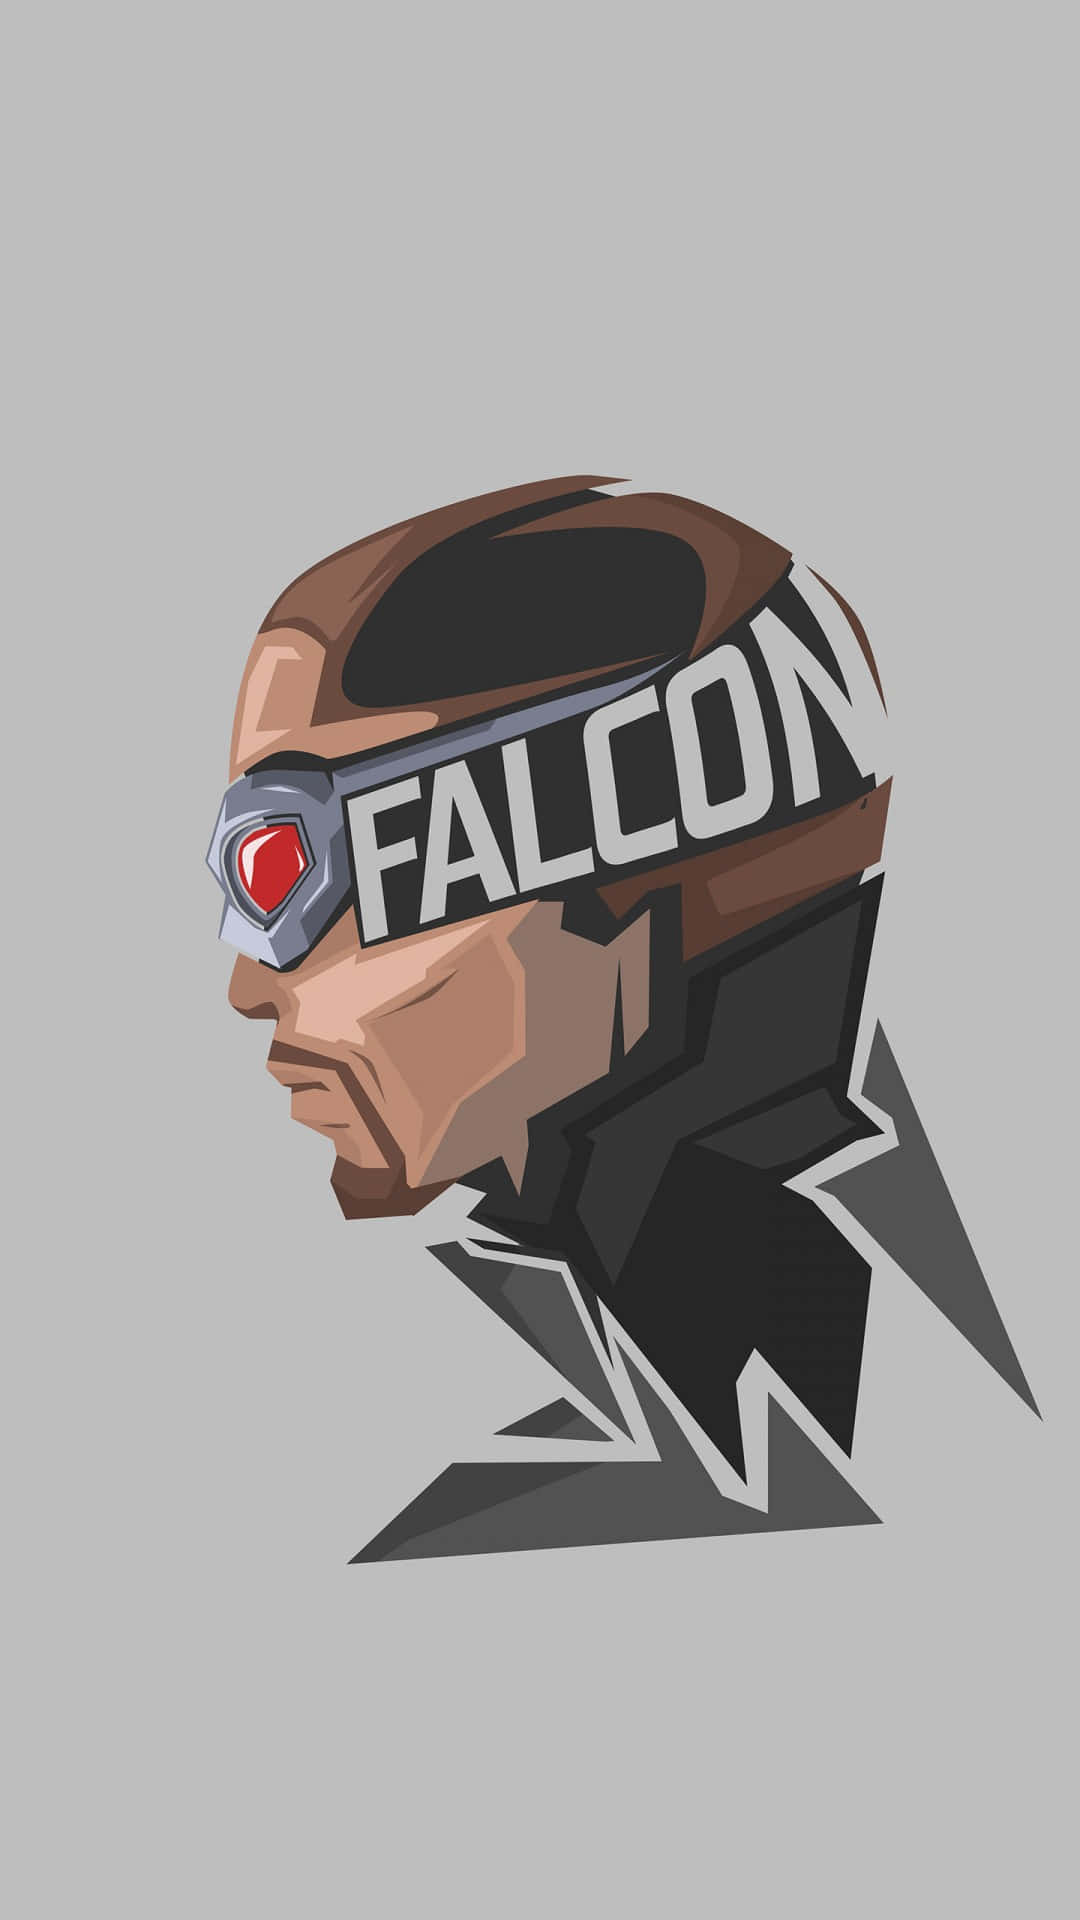 Marvel Falcon Logo 1080 X 1920 Wallpaper